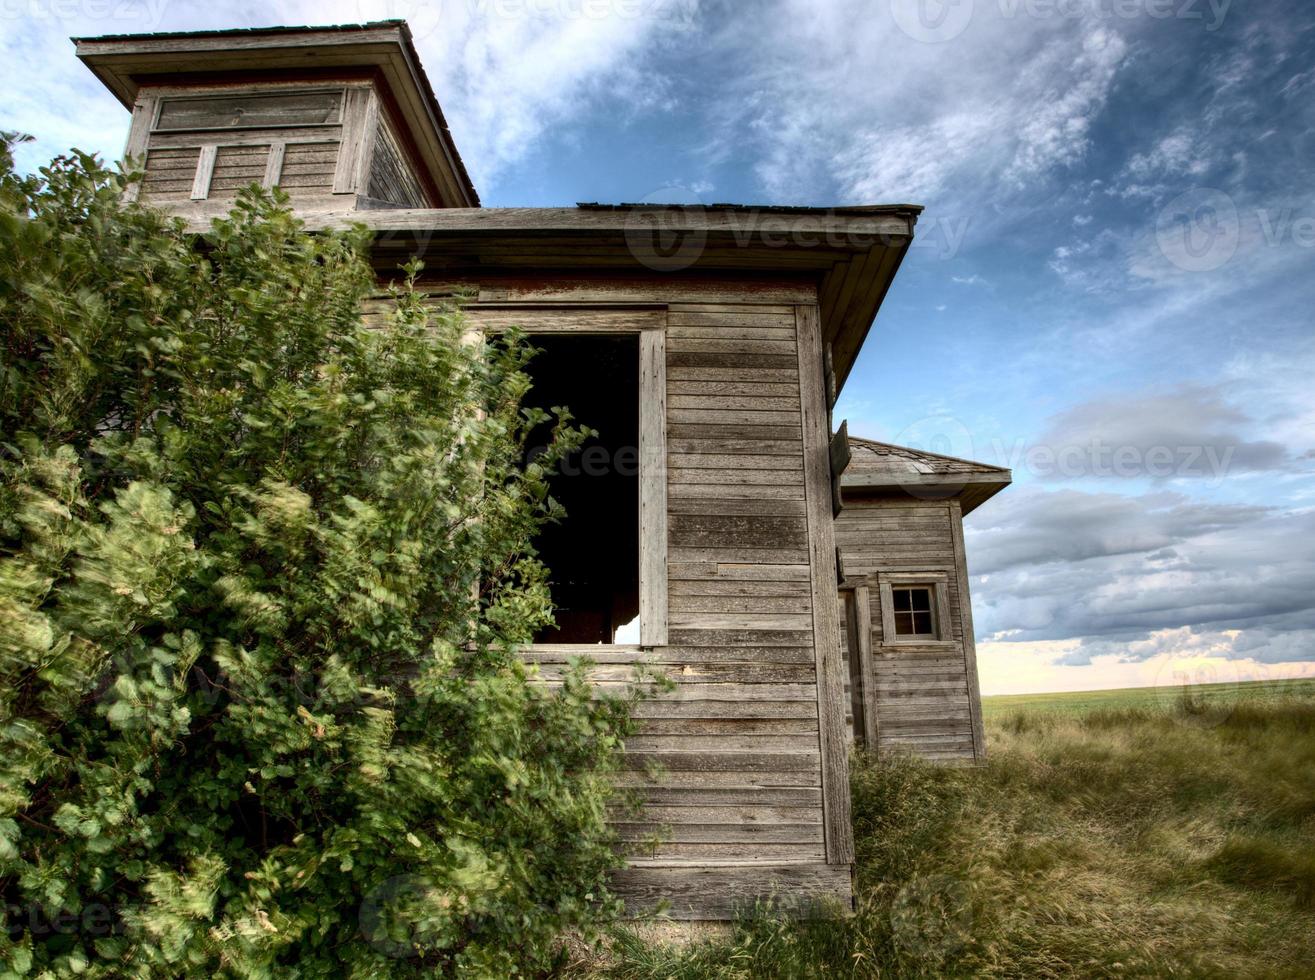 Abandoned Farmhouse Saskatchewan Canada photo